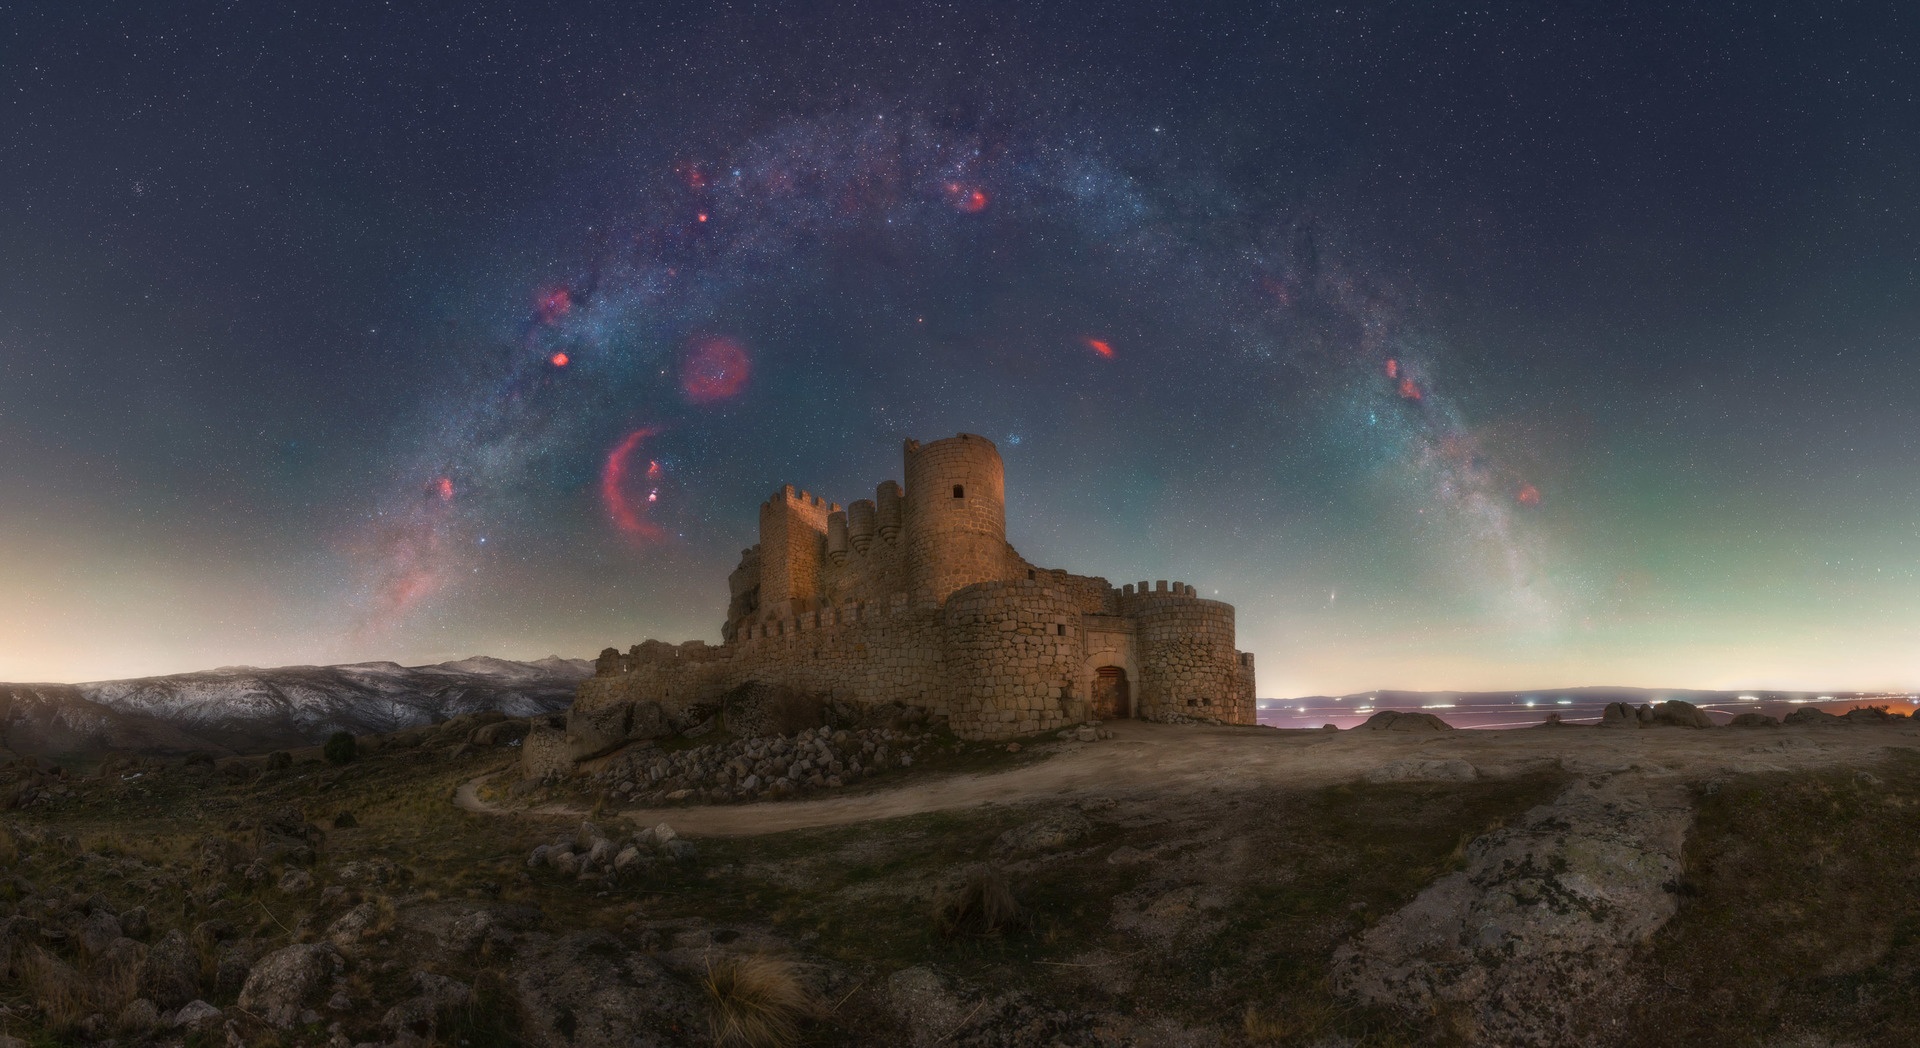 Winter Milky Way arc over castle in Spain